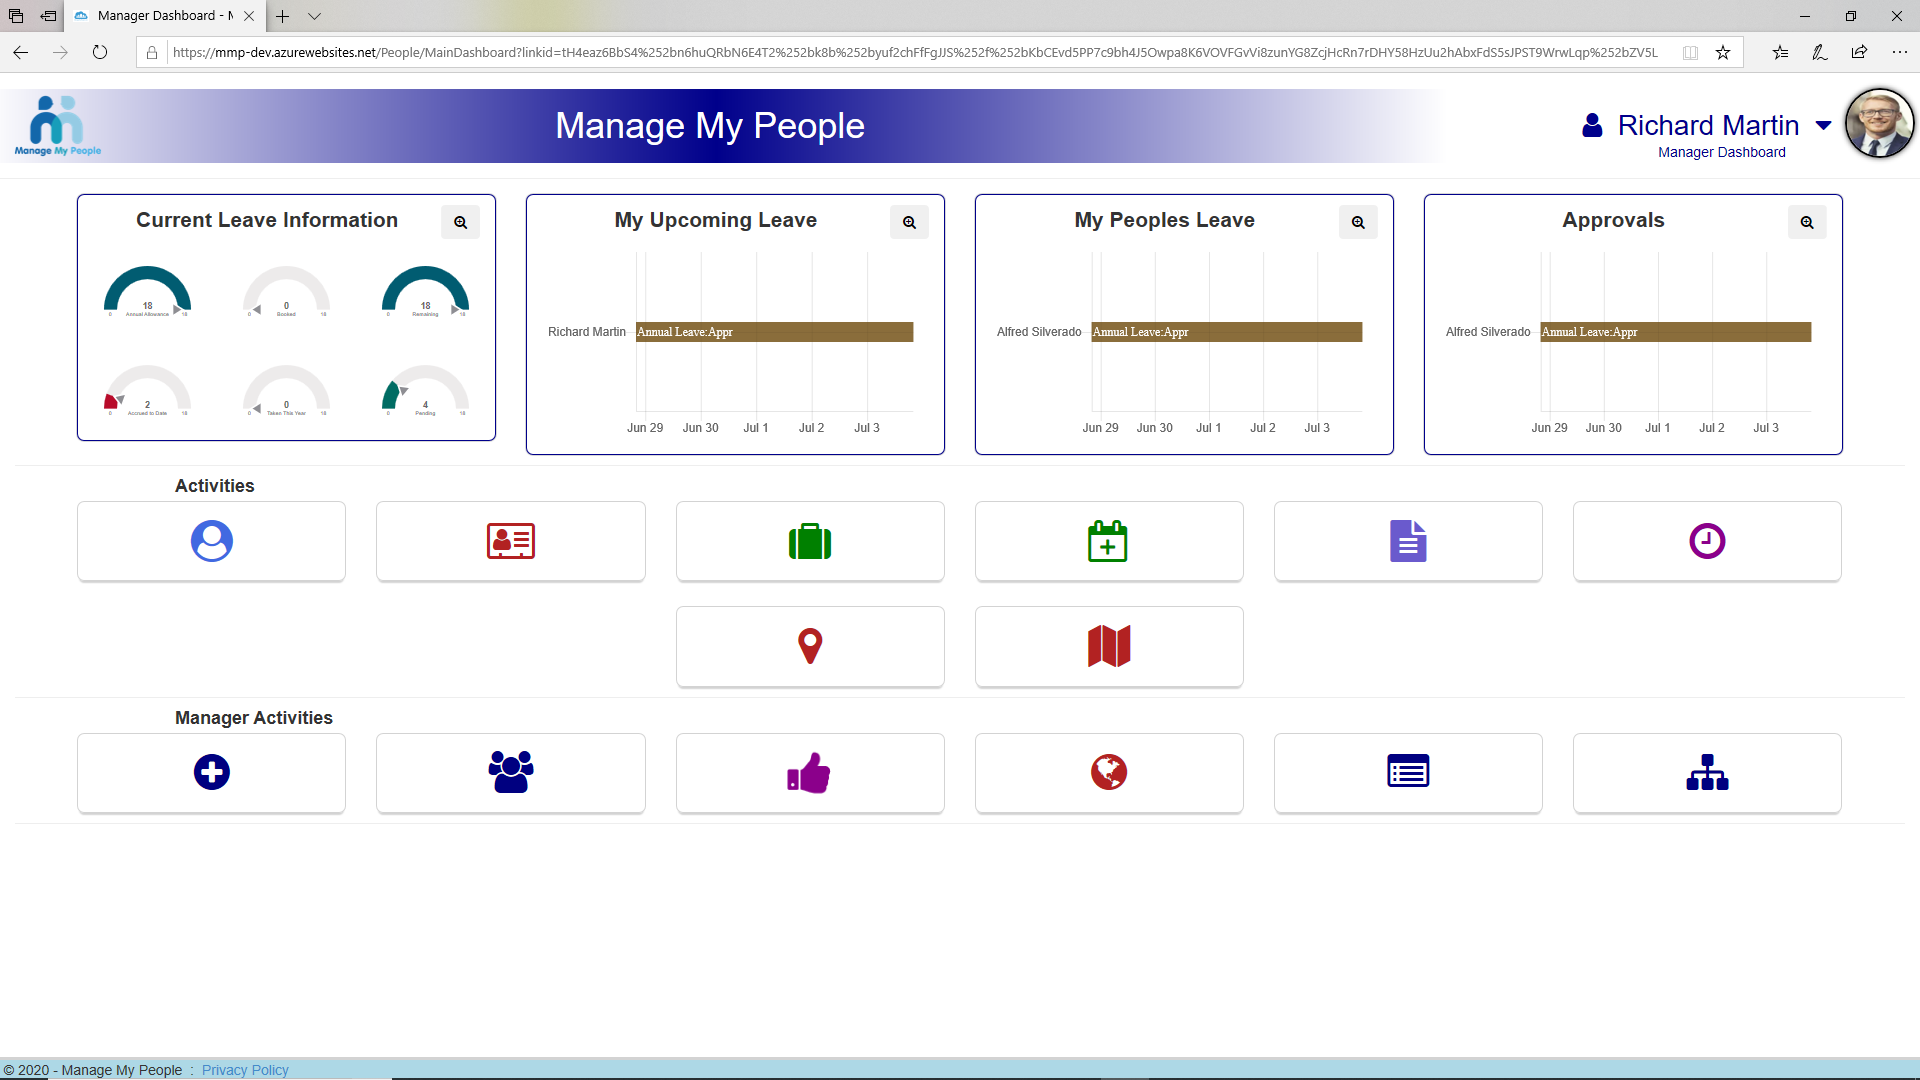 MMP Manager Dashboard Desktop